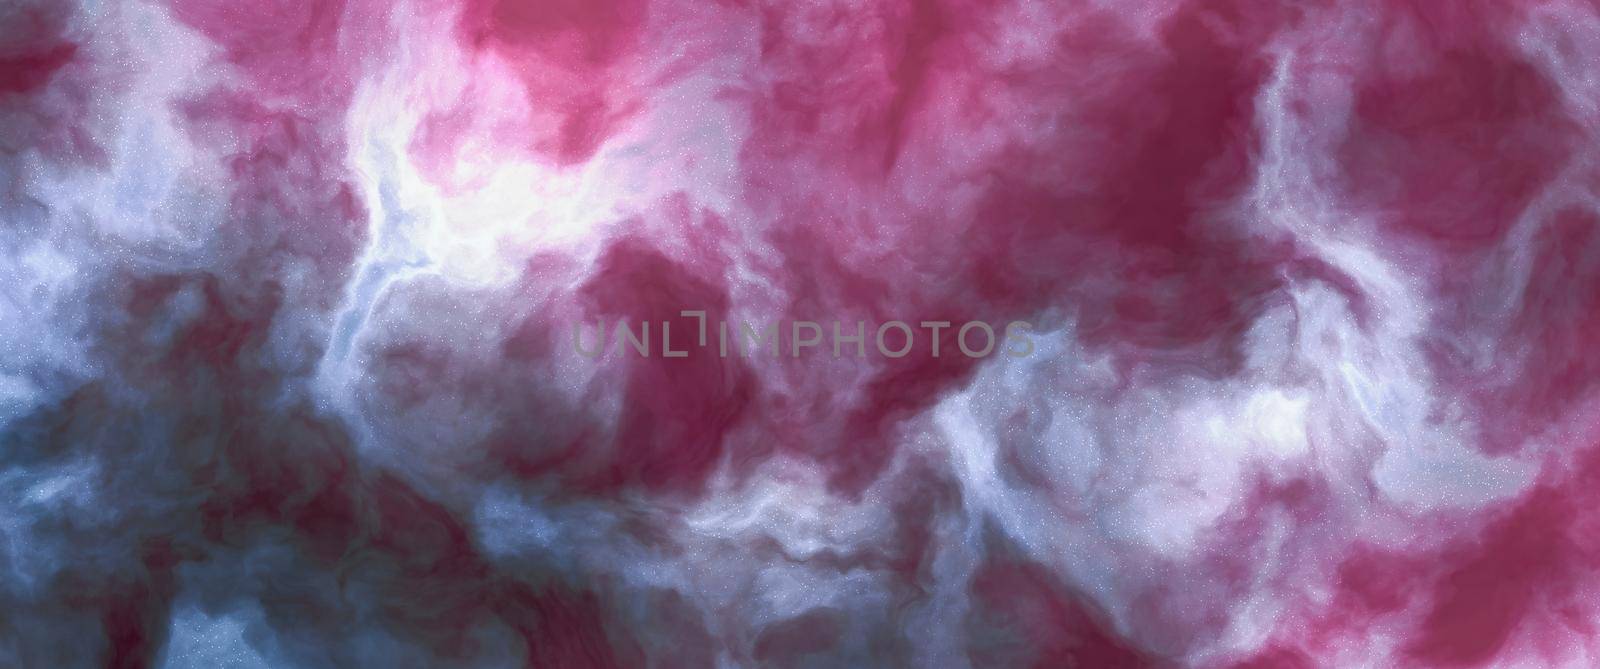 violet nebula background by asolano